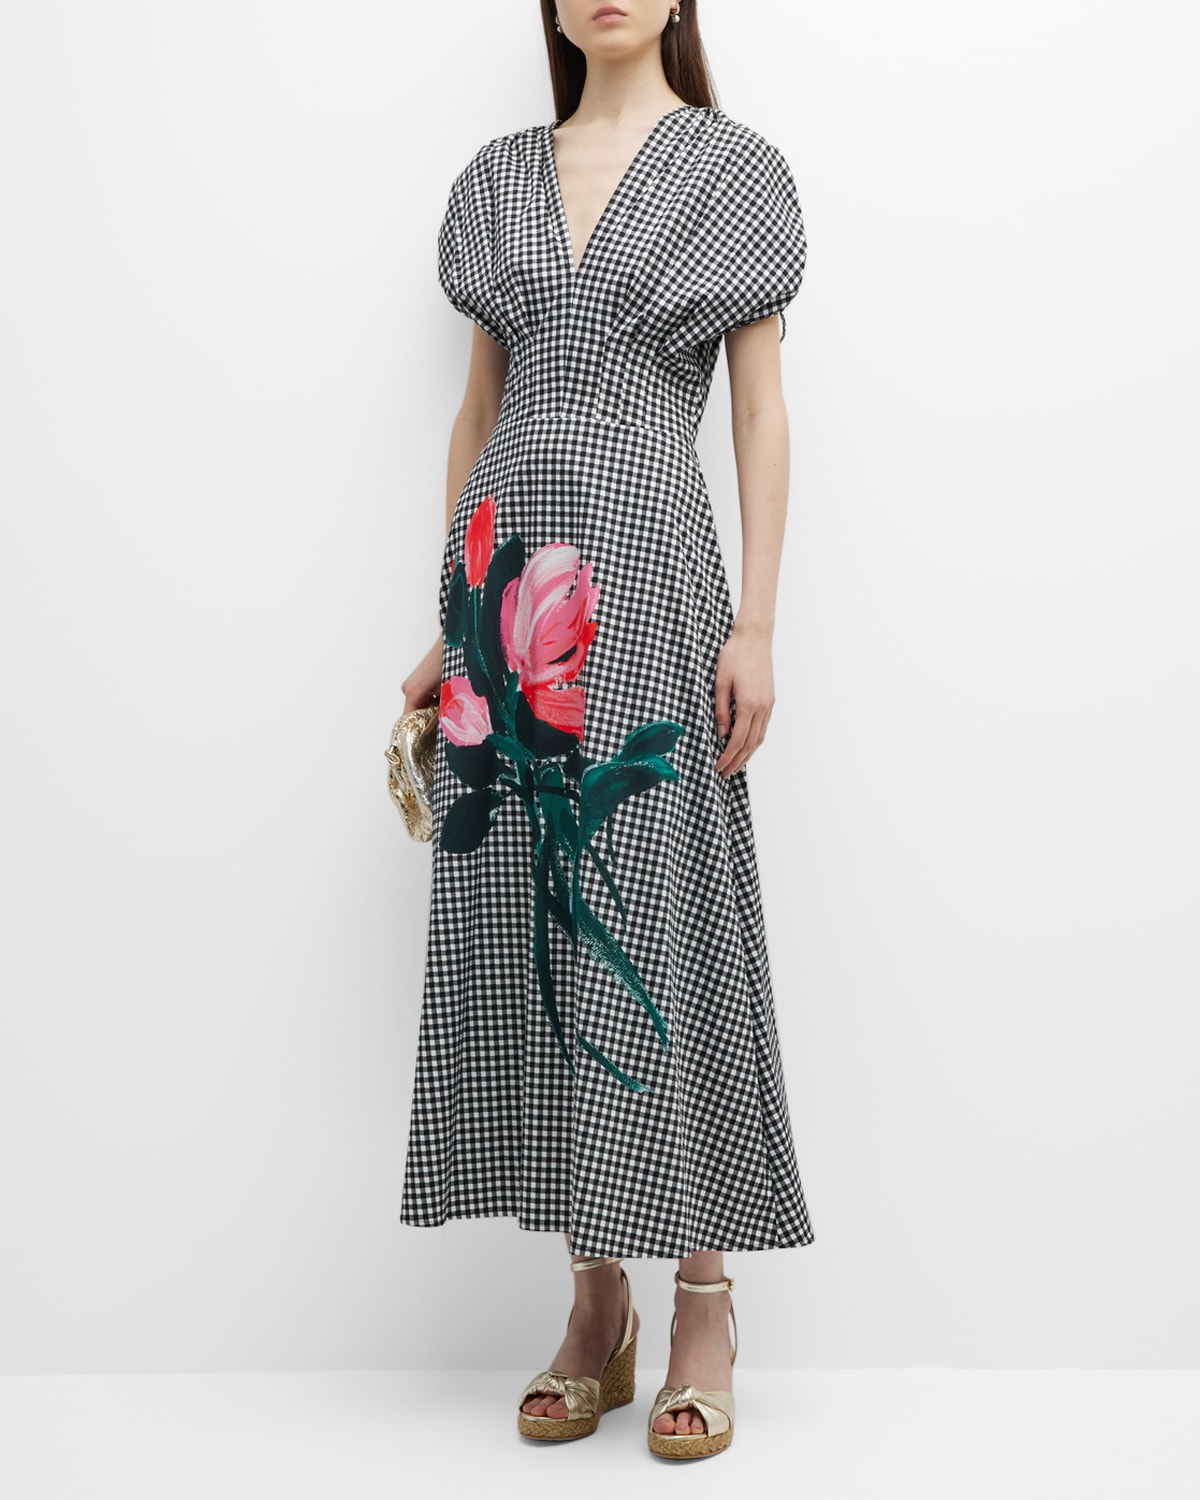 Gingham Floral-Print Dress